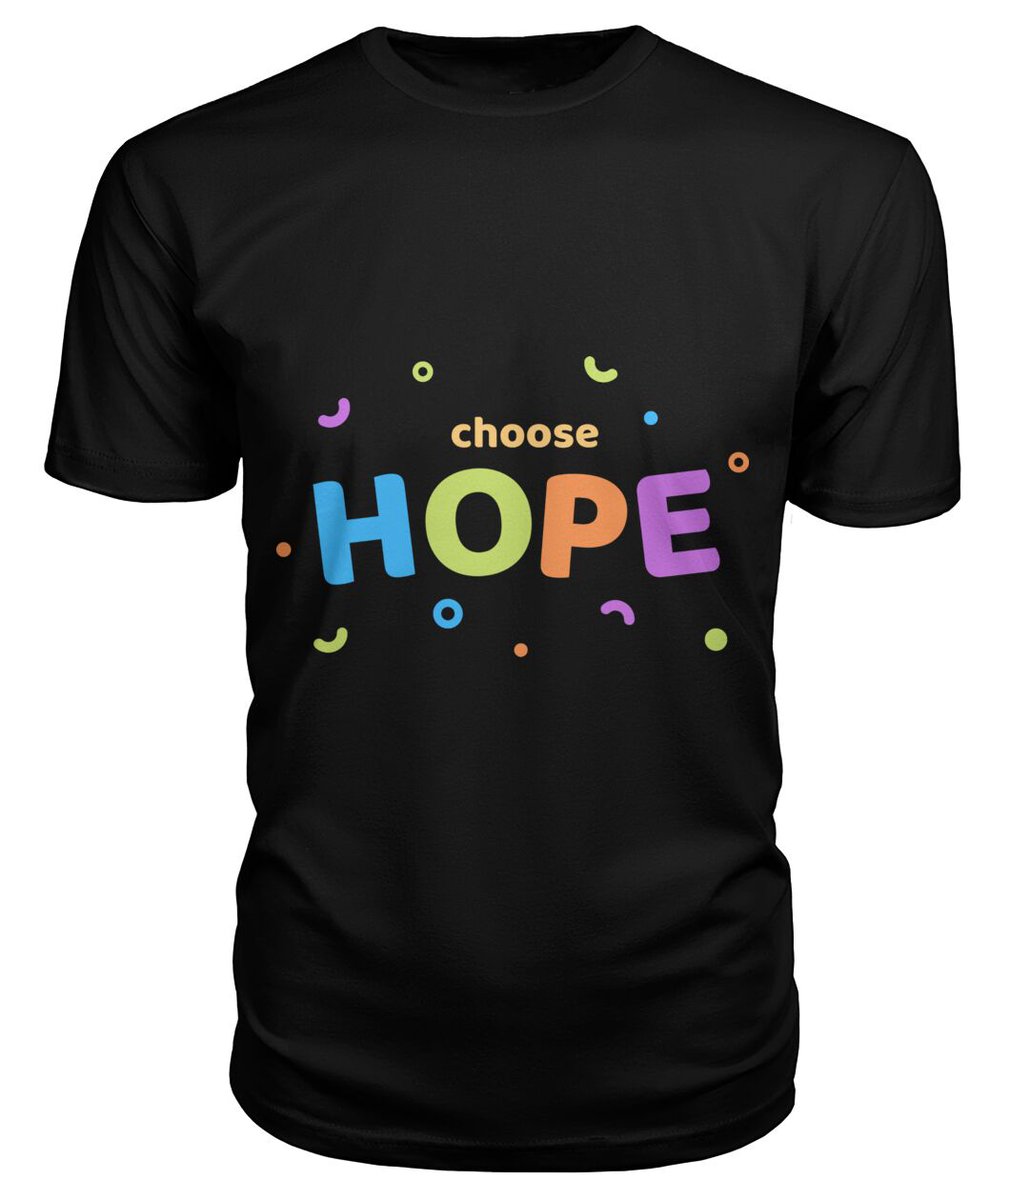 Choose Hope T-Shirt 🖤 
✅️ Available in First Comment 🩵

.
#hope #StrayKidsComeback
 #FridayFeeling #FridayVibes #Fridaymotivation #loveislove #FridayThoughts #FridaySpecial #GodistheGreatest